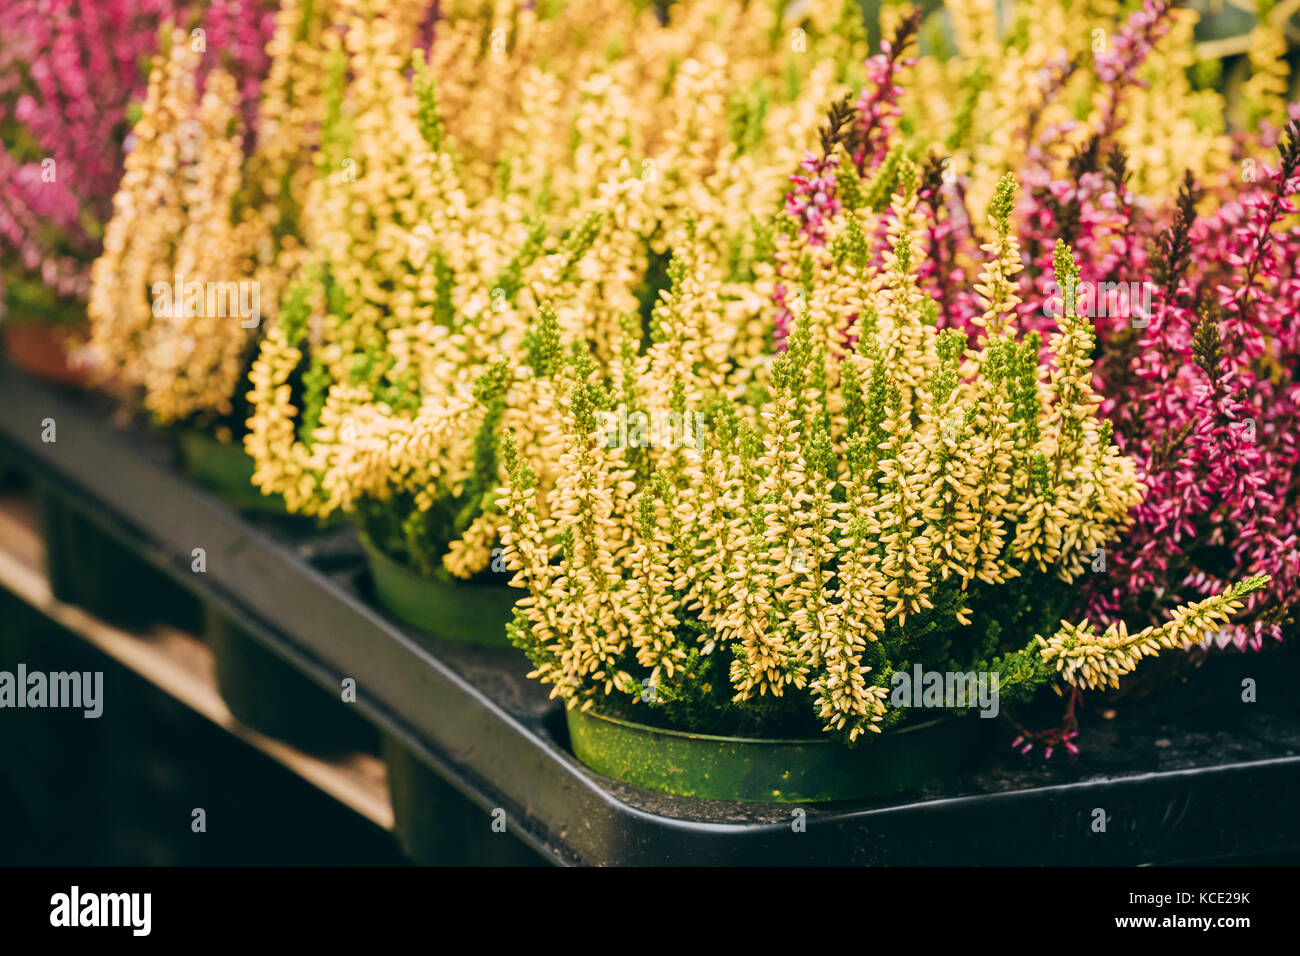 Bush Of Calluna Plant In Pot In Flowers Store Market. Stock Photo